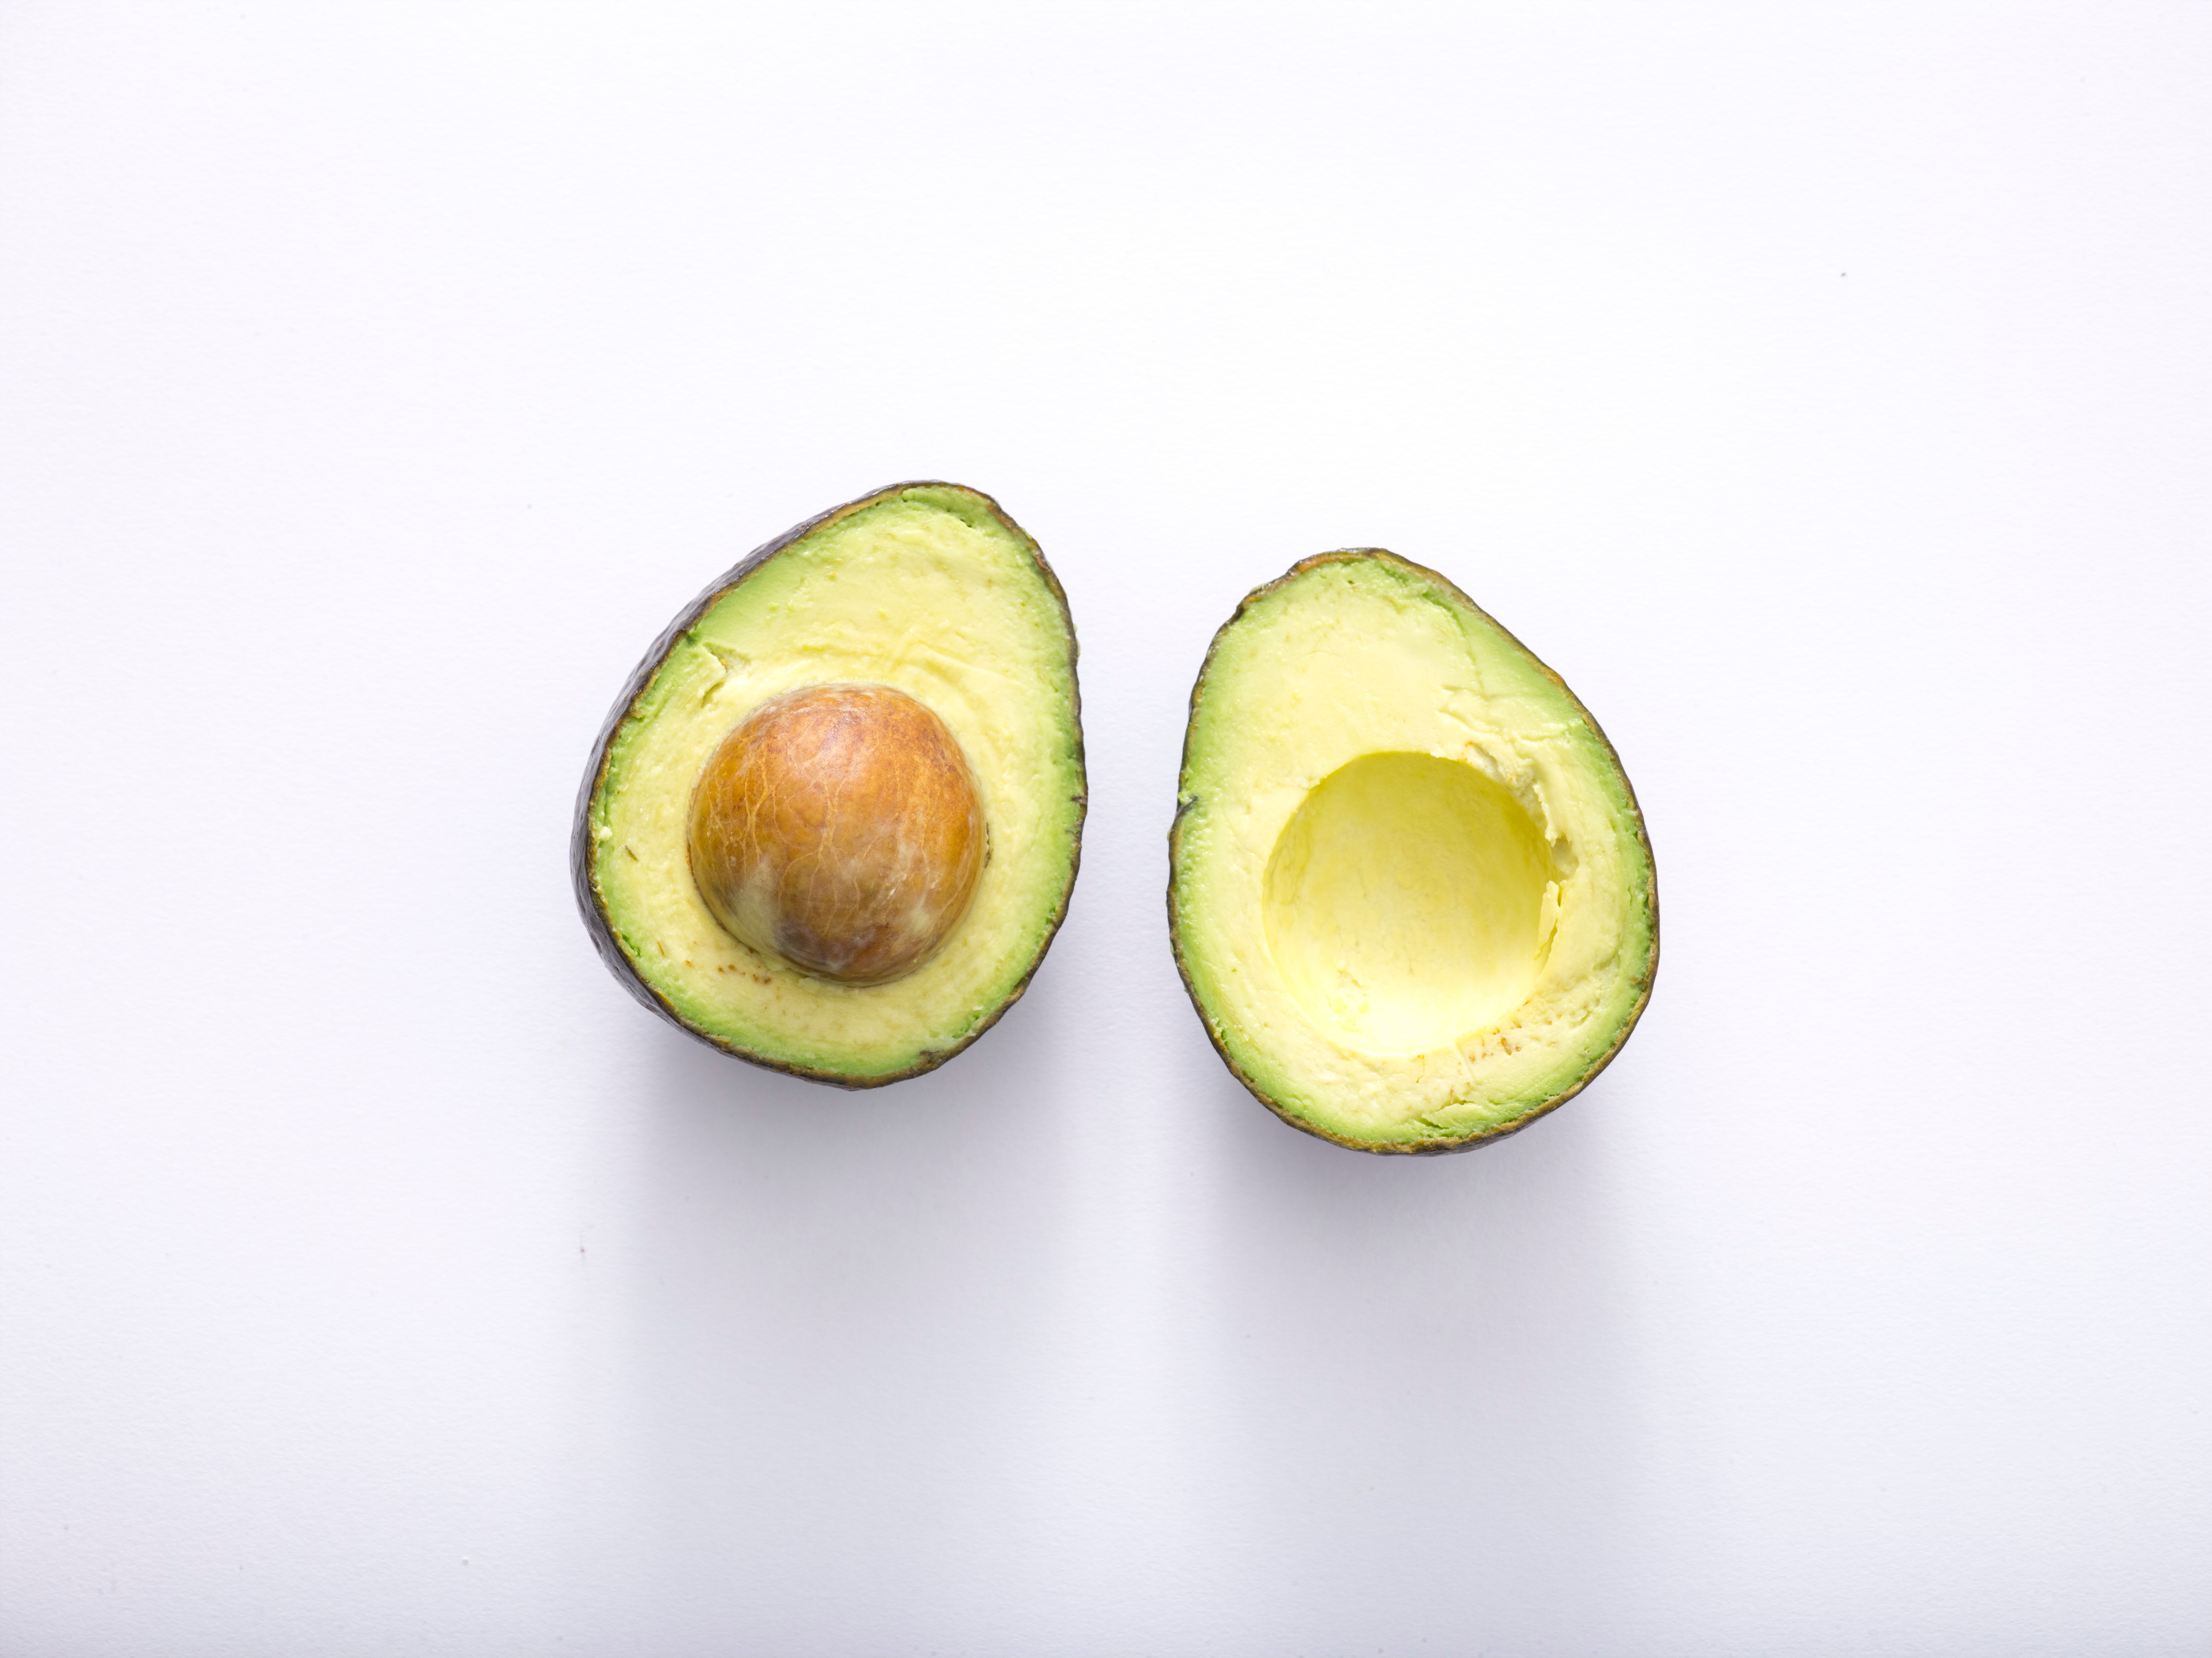 Kalorien in Avocados: Aufgeschnittene Avocado